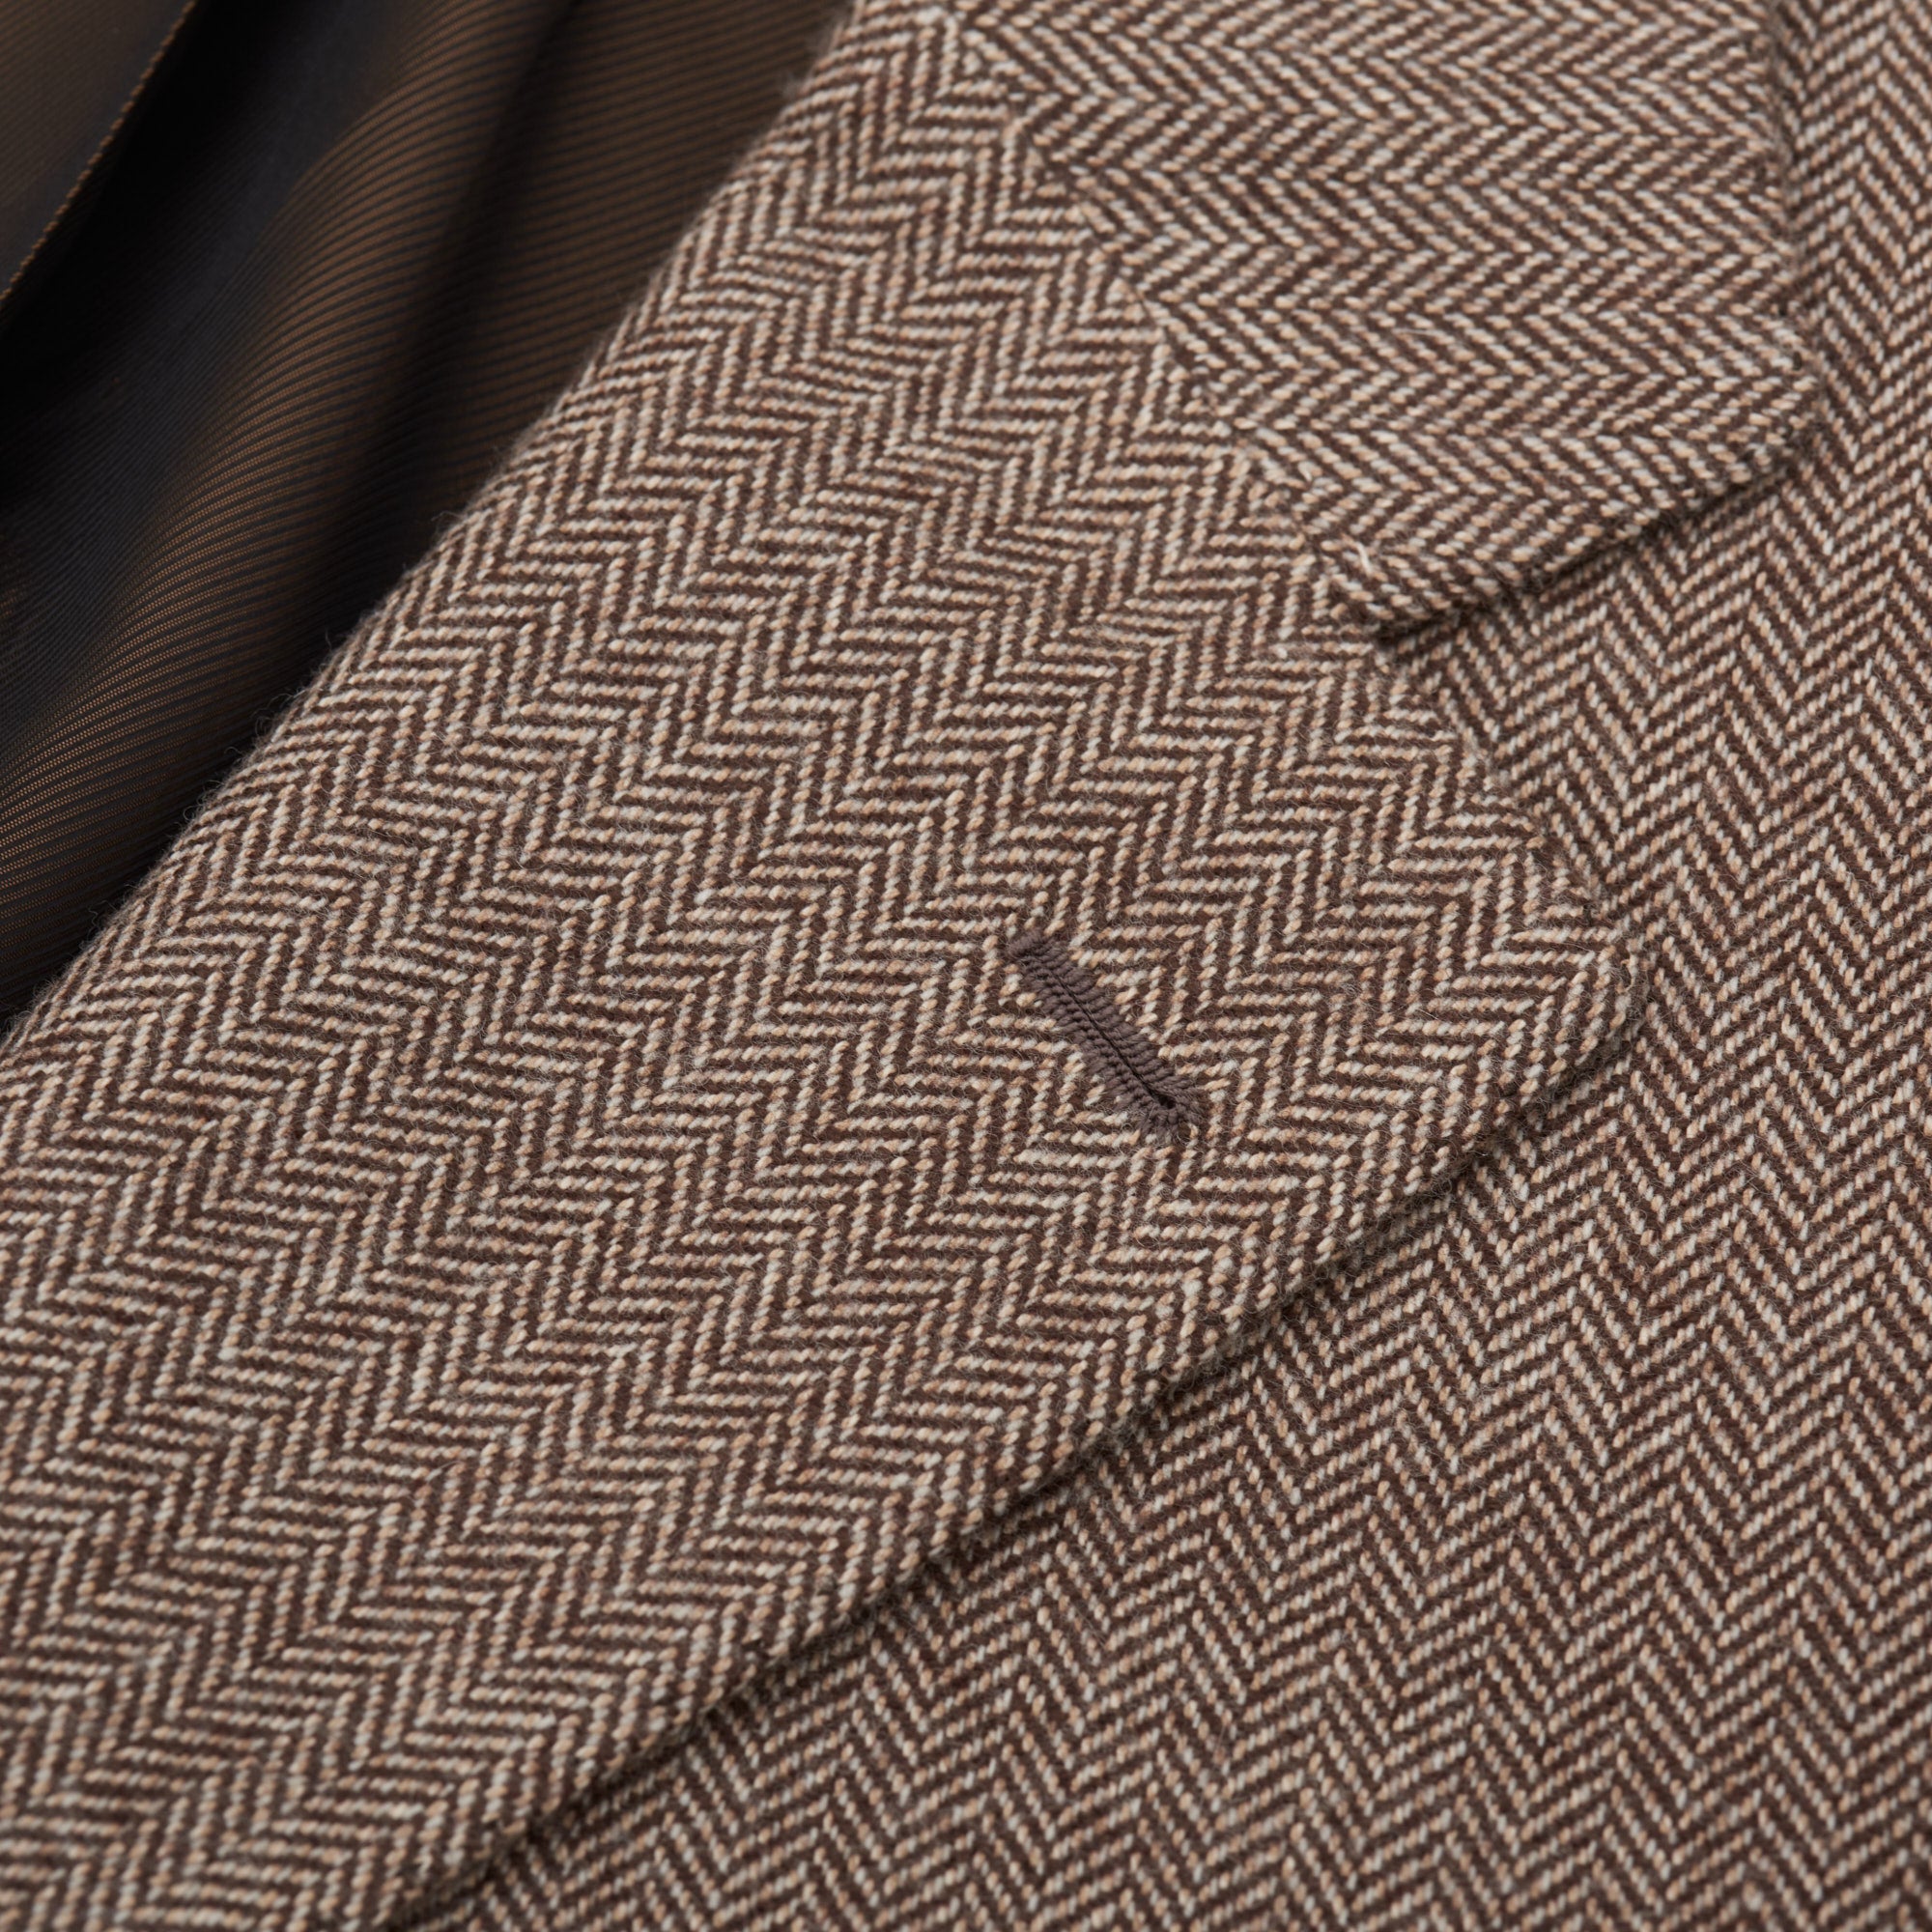 CESARE ATTOLINI Napoli Handmade Gray Herringbone Wool-Cotton Jacket NEW